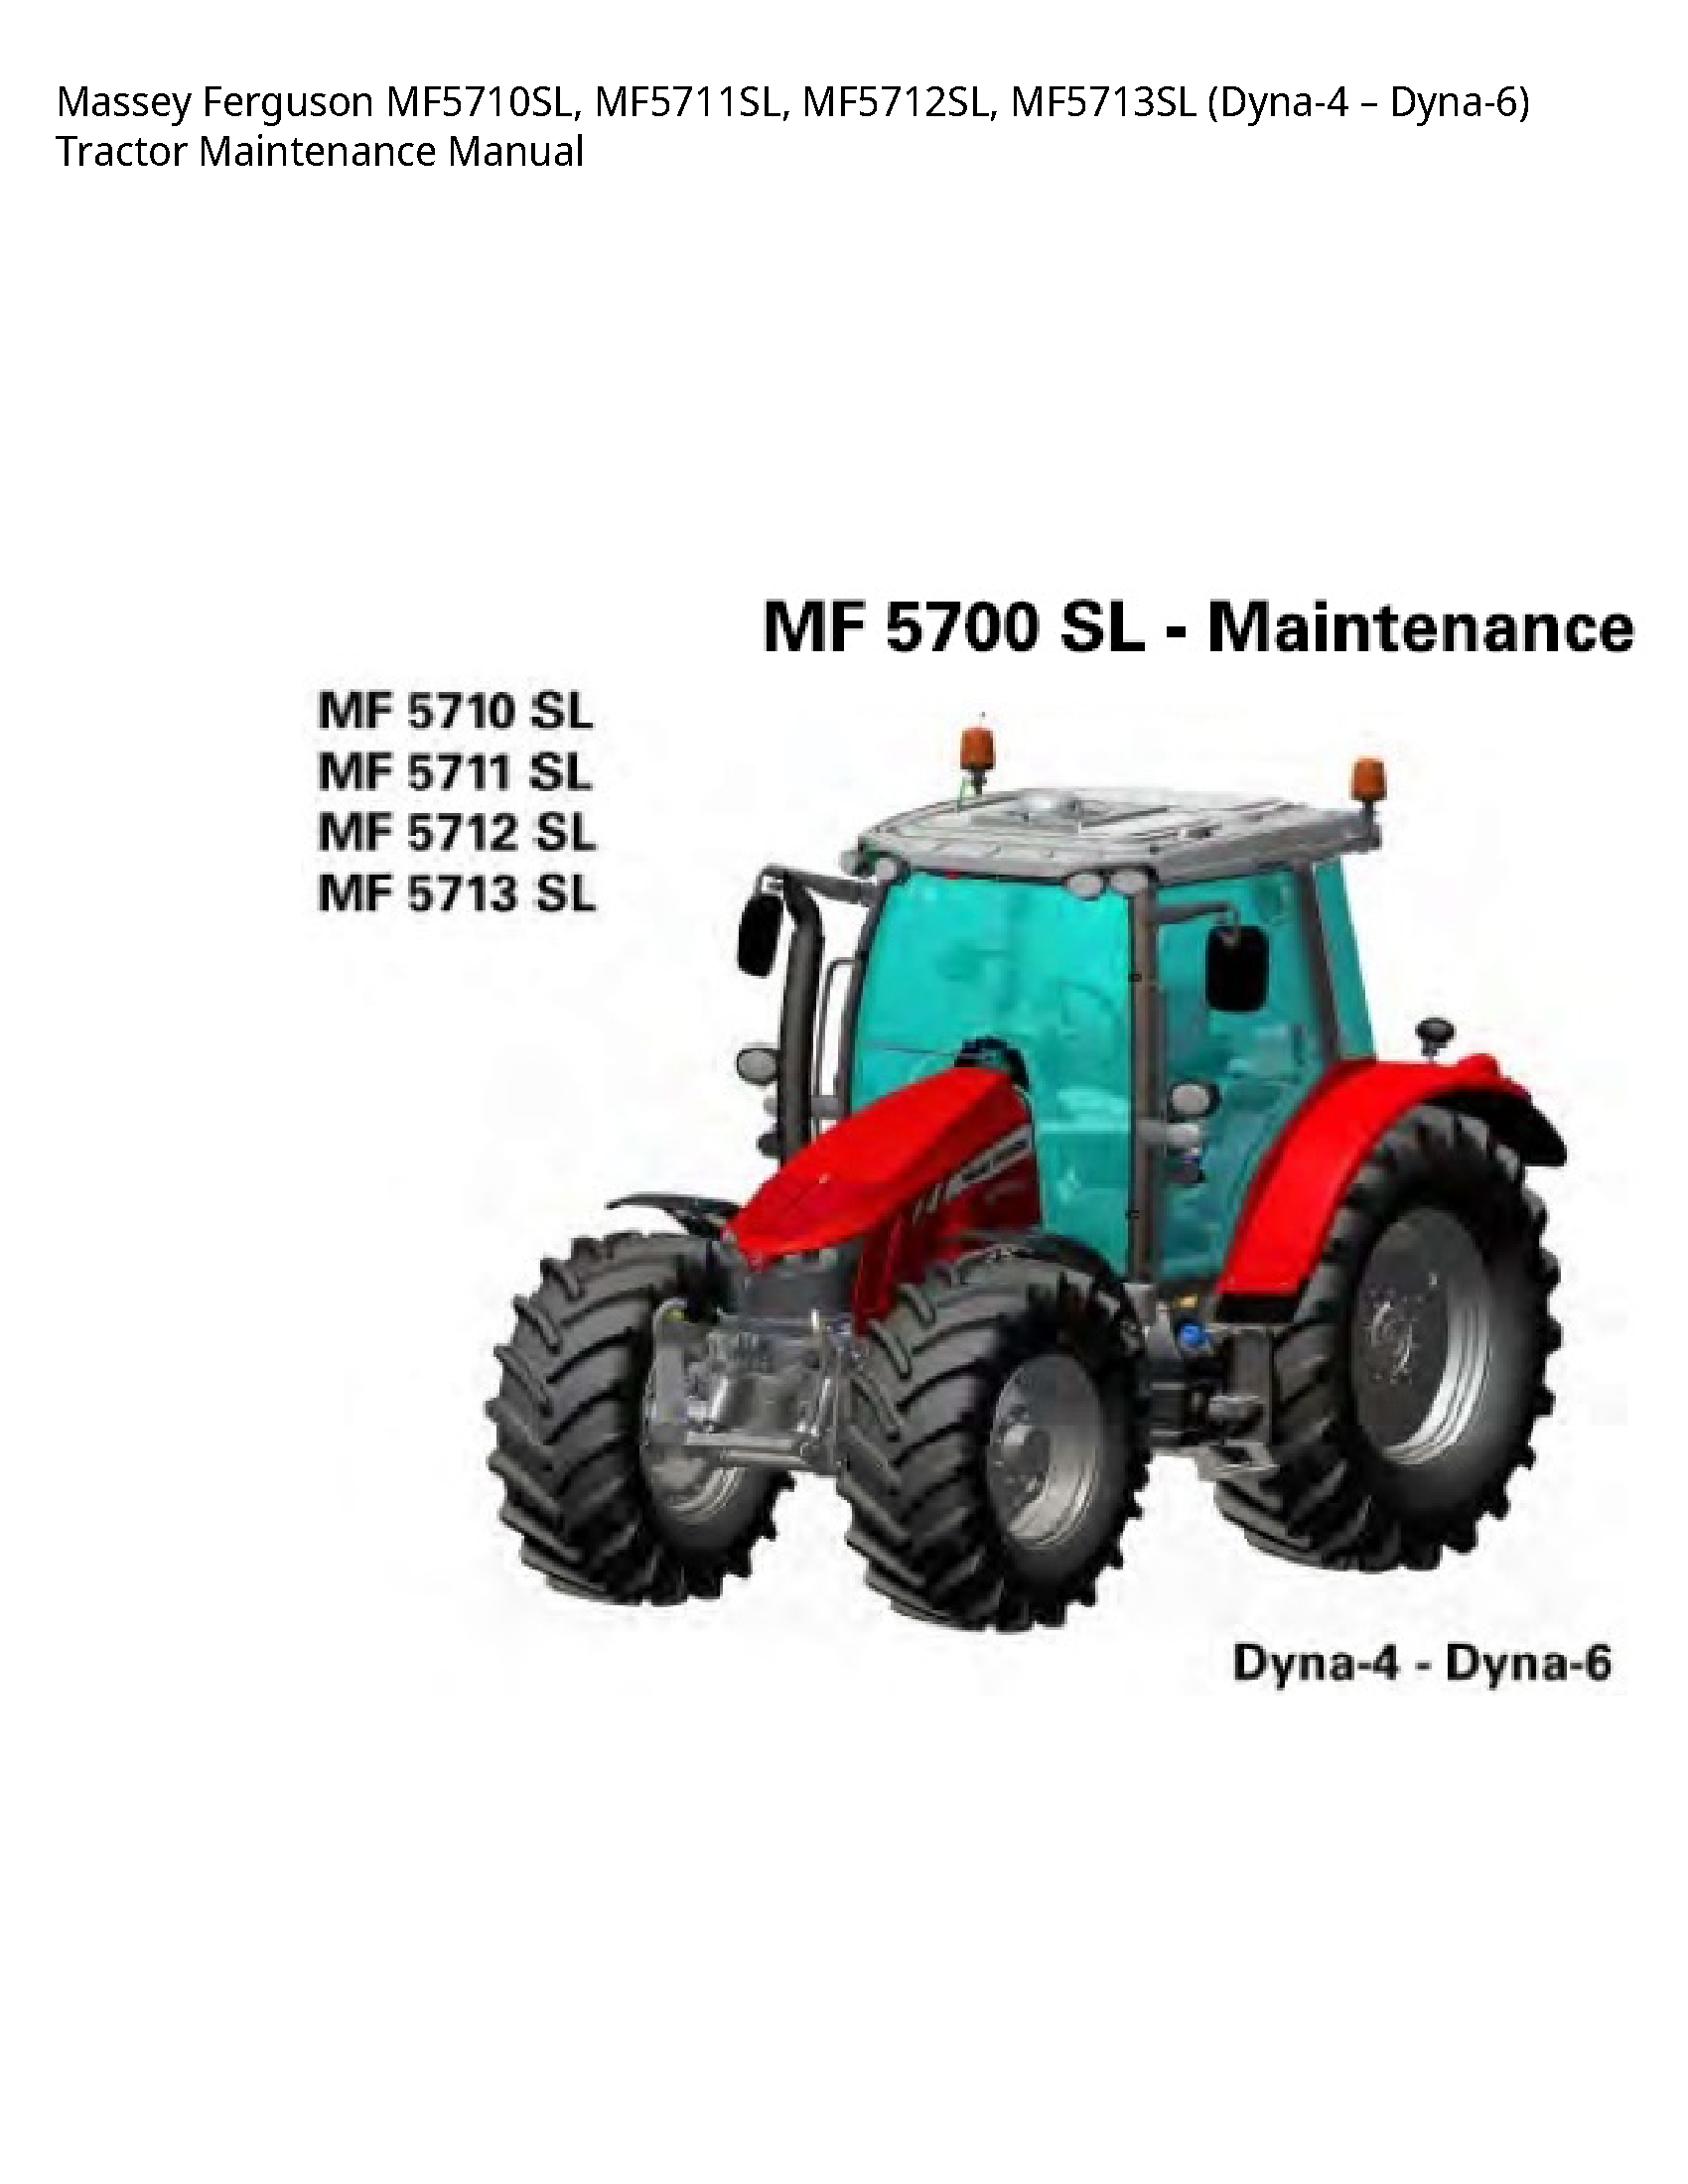 Massey Ferguson MF5710SL Tractor Maintenance manual